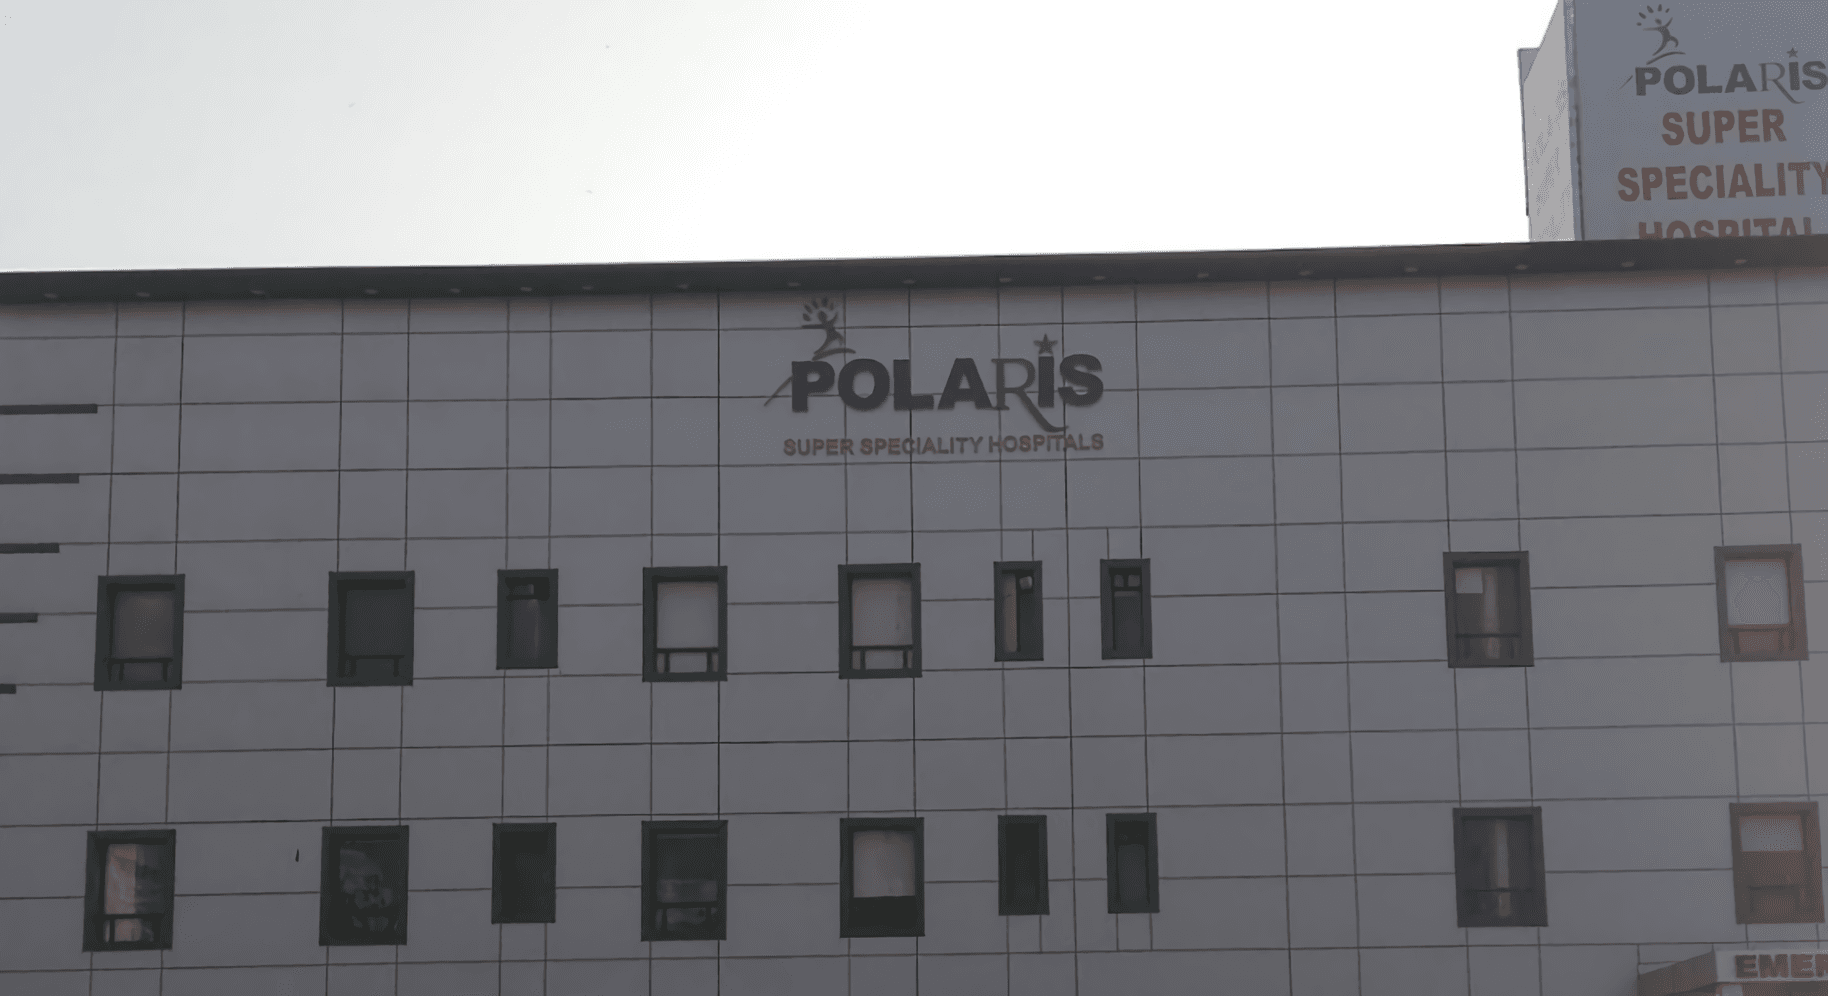 Polaris Hospital